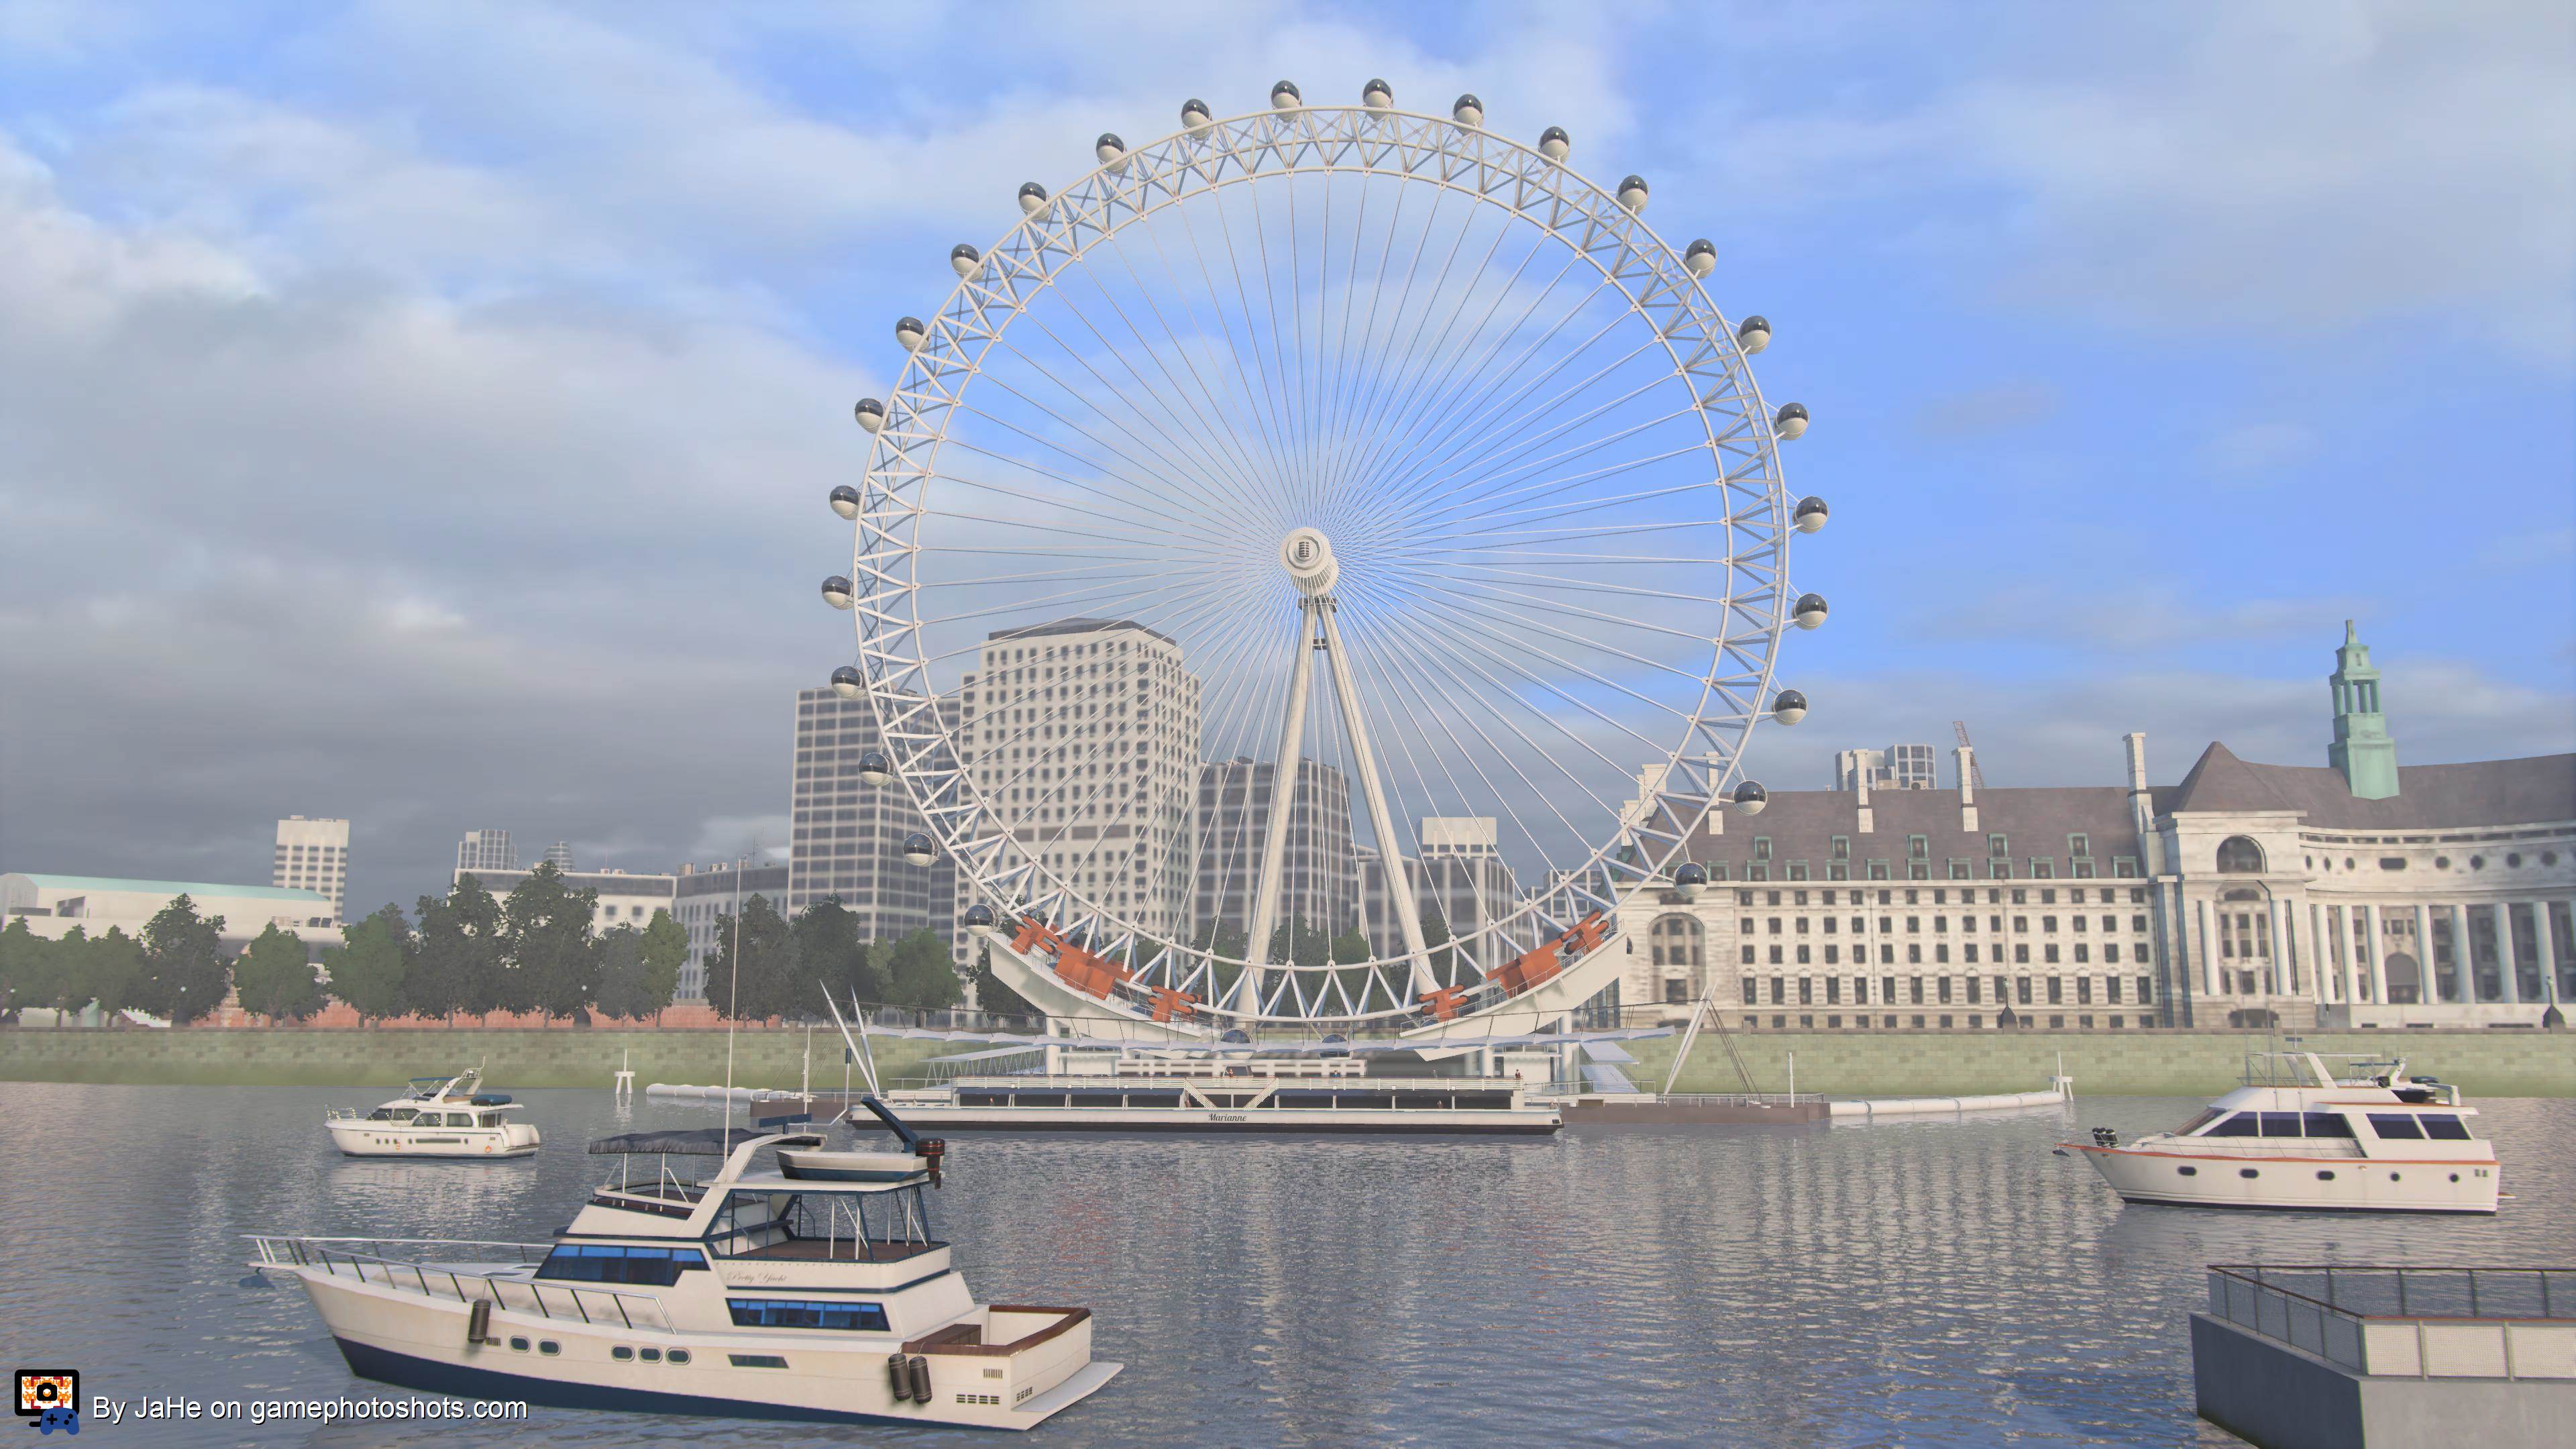 The London Eye ferris wheel at the river Thames